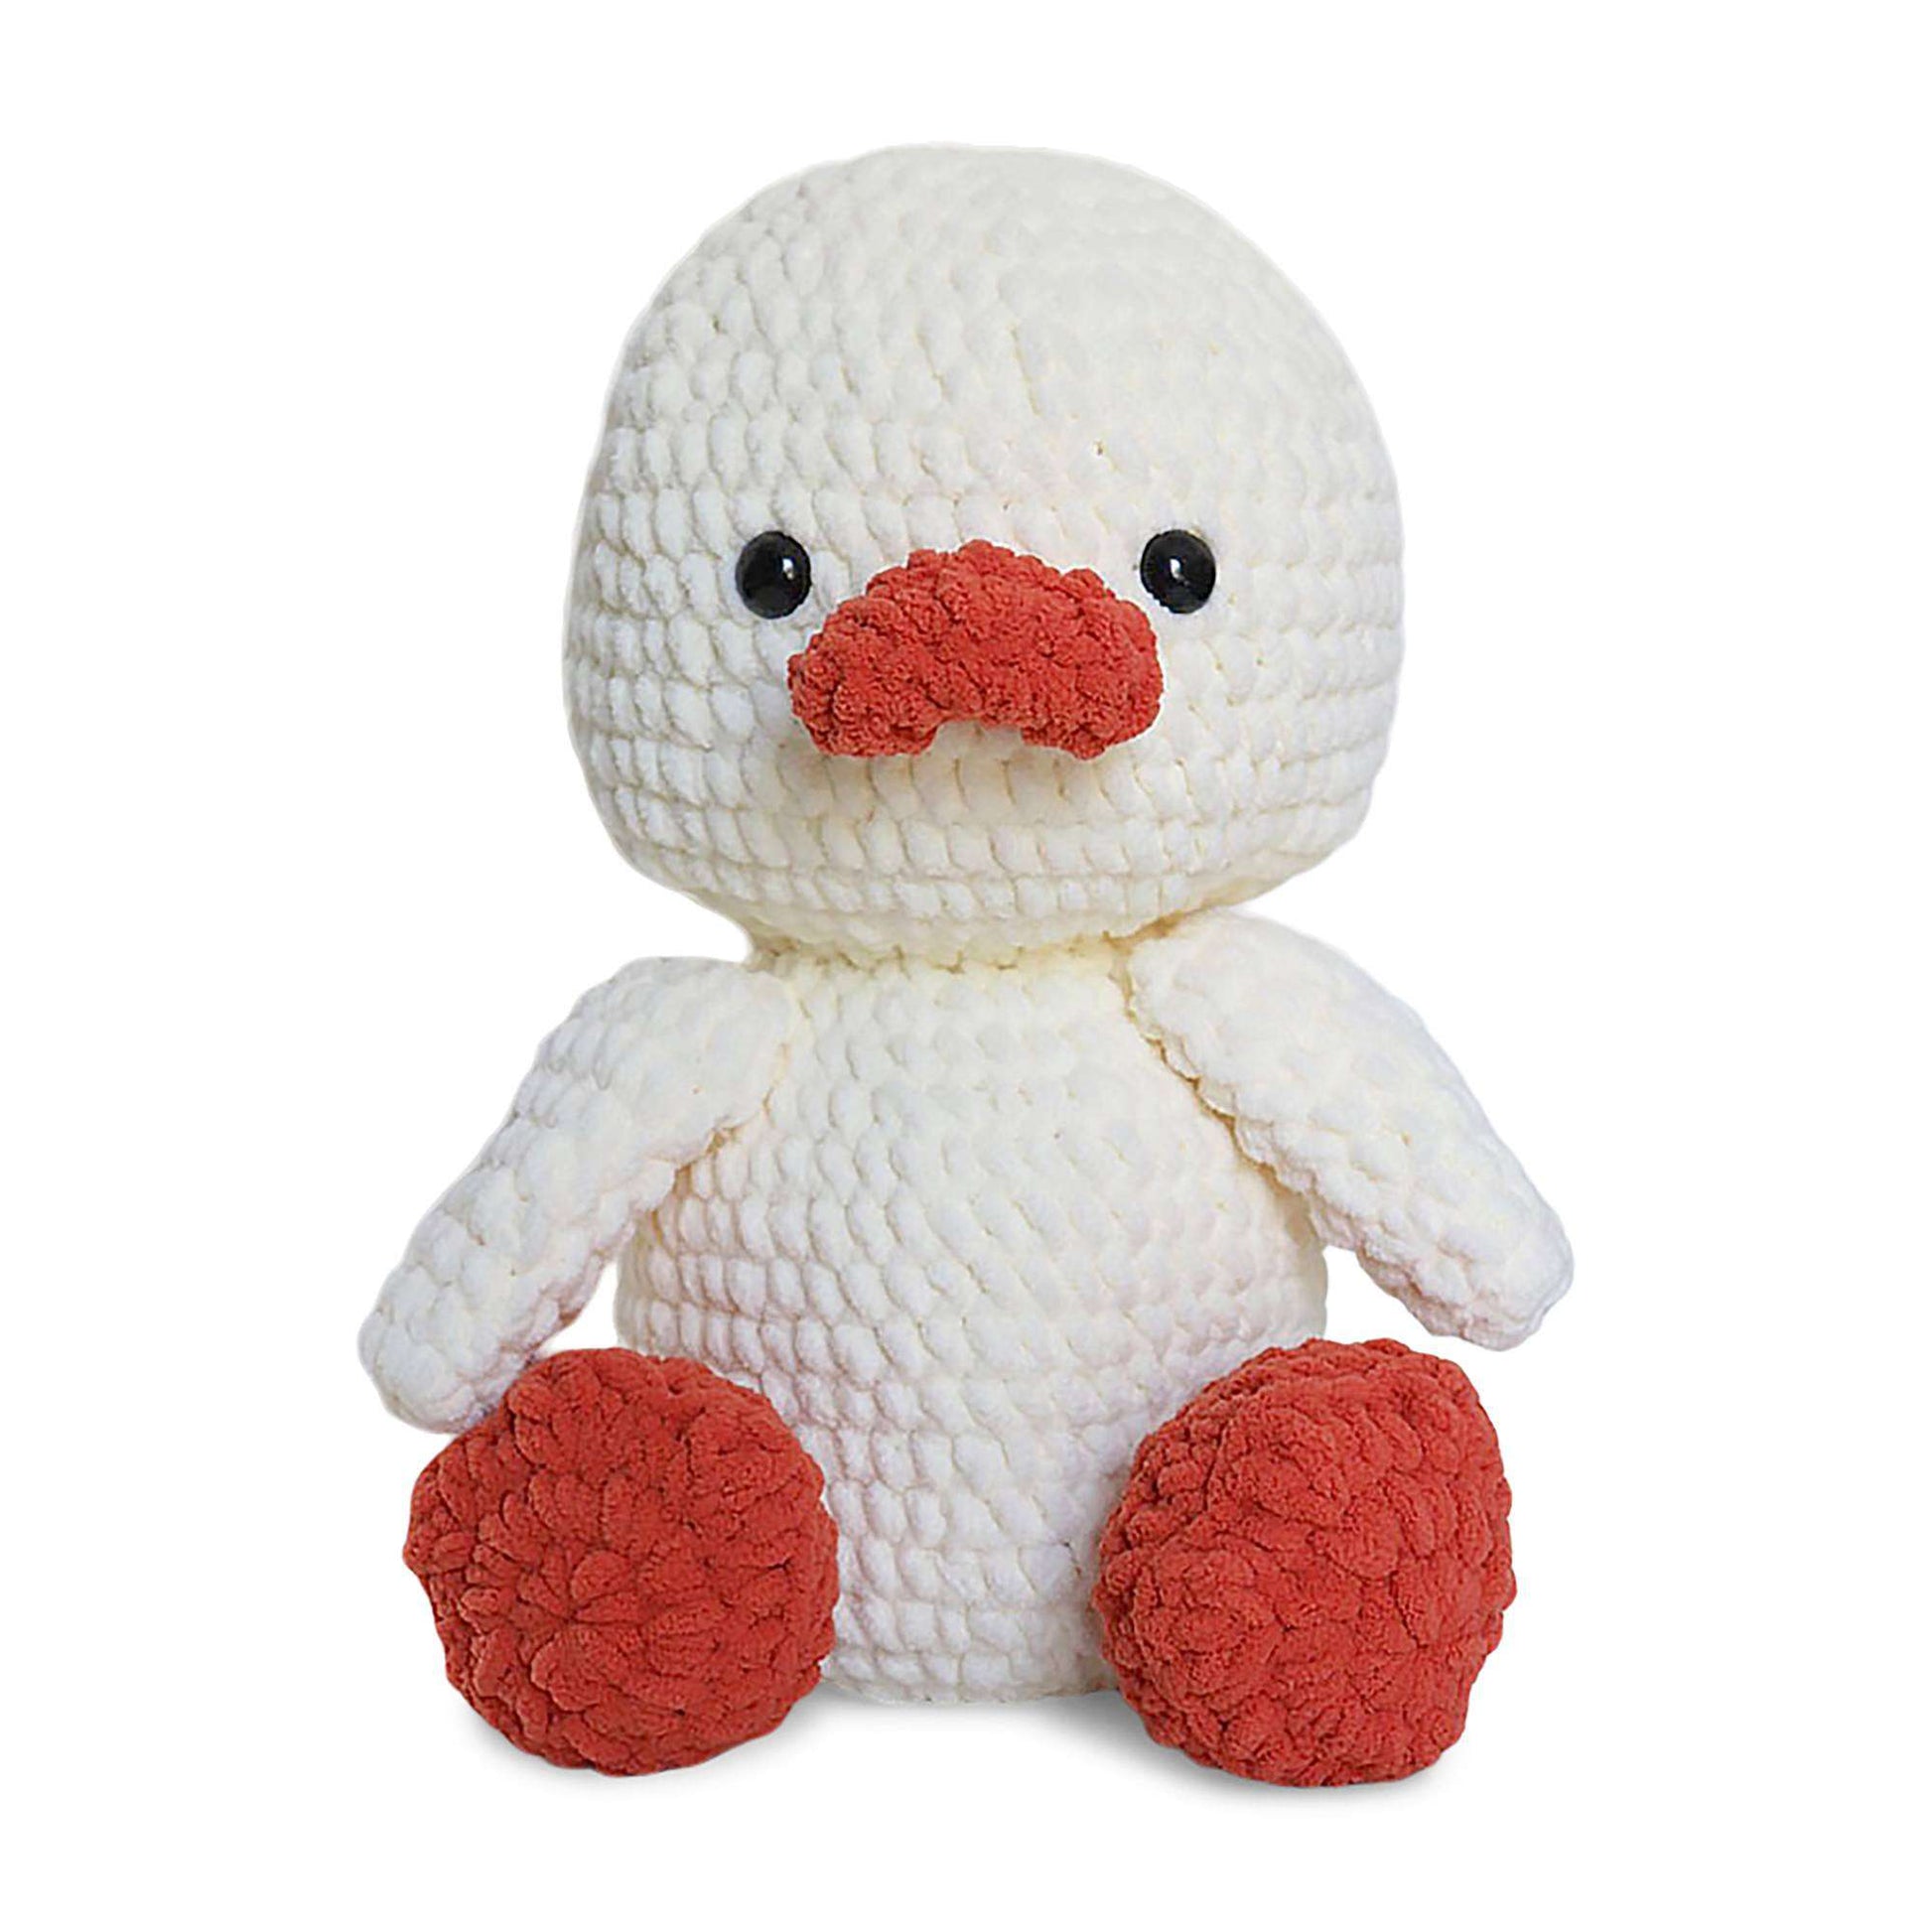 Free Bernat Quackers The Crochet Duck Pattern